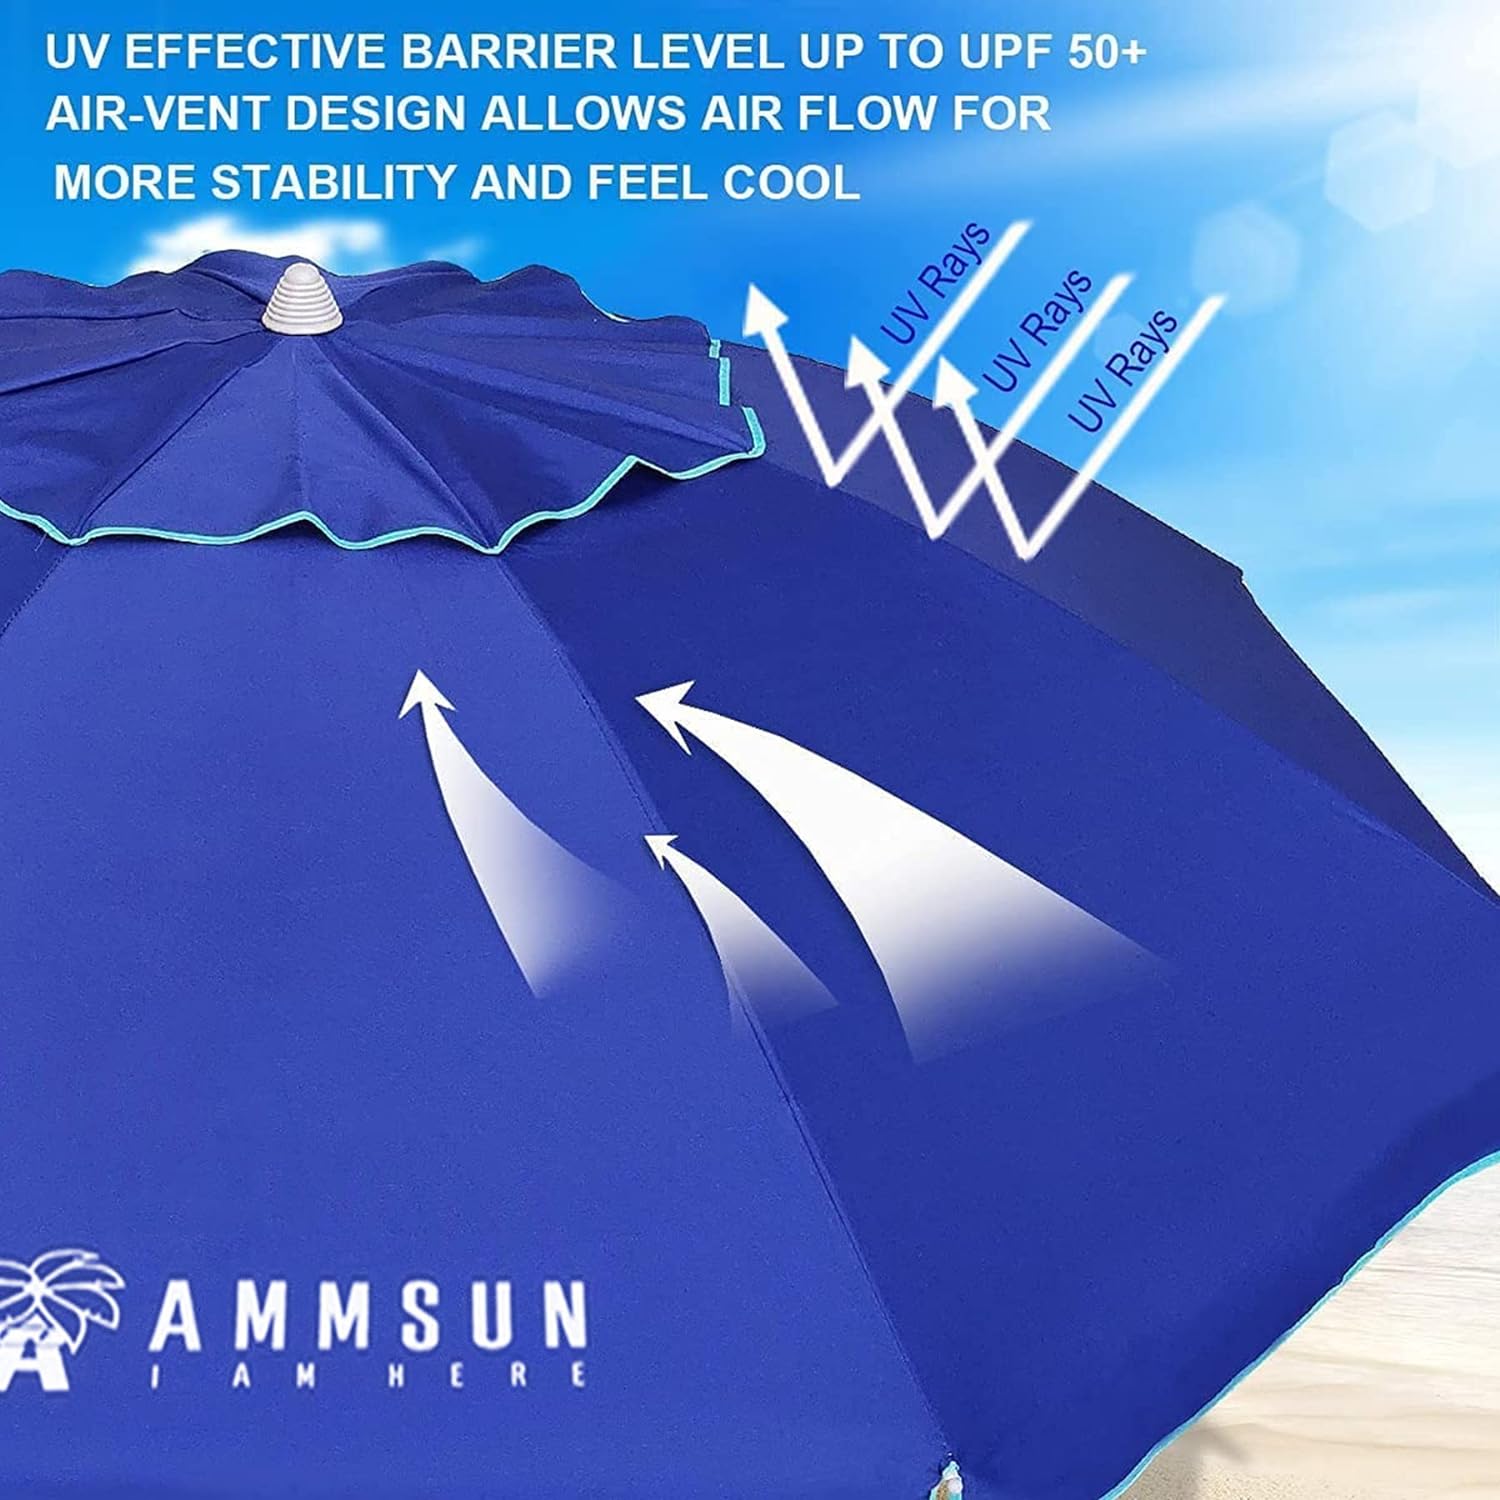 AMMSUN 6.5ft Outdoor  Pool Umbrella Blue